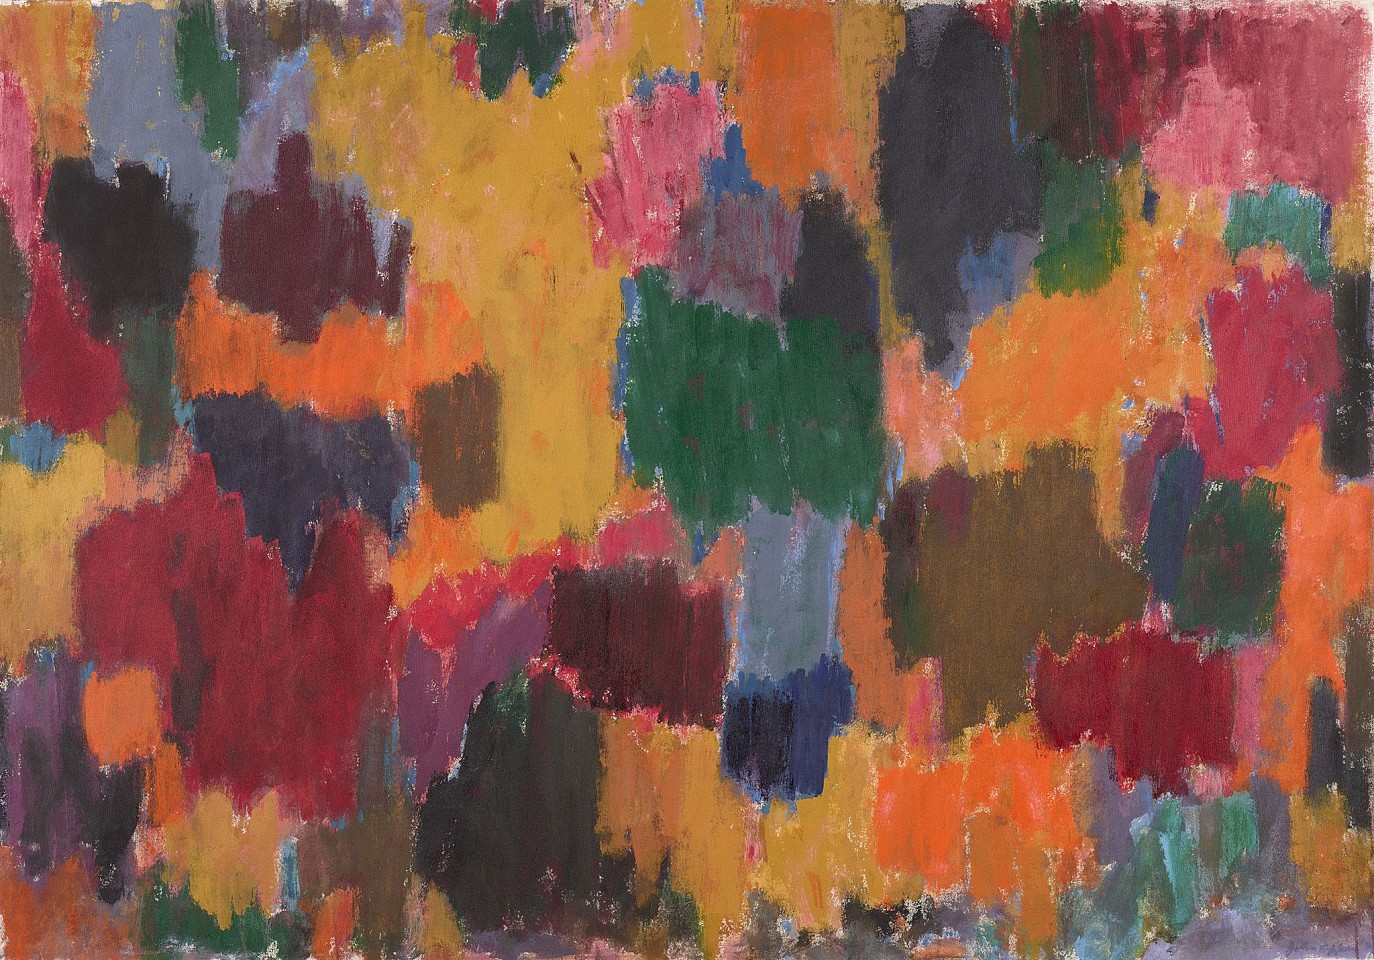 John Opper, Untitled (227J BOW-6), 1989
Acrylic on canvas, 56 x 80 in. (142.2 x 203.2 cm)
OPP-00072